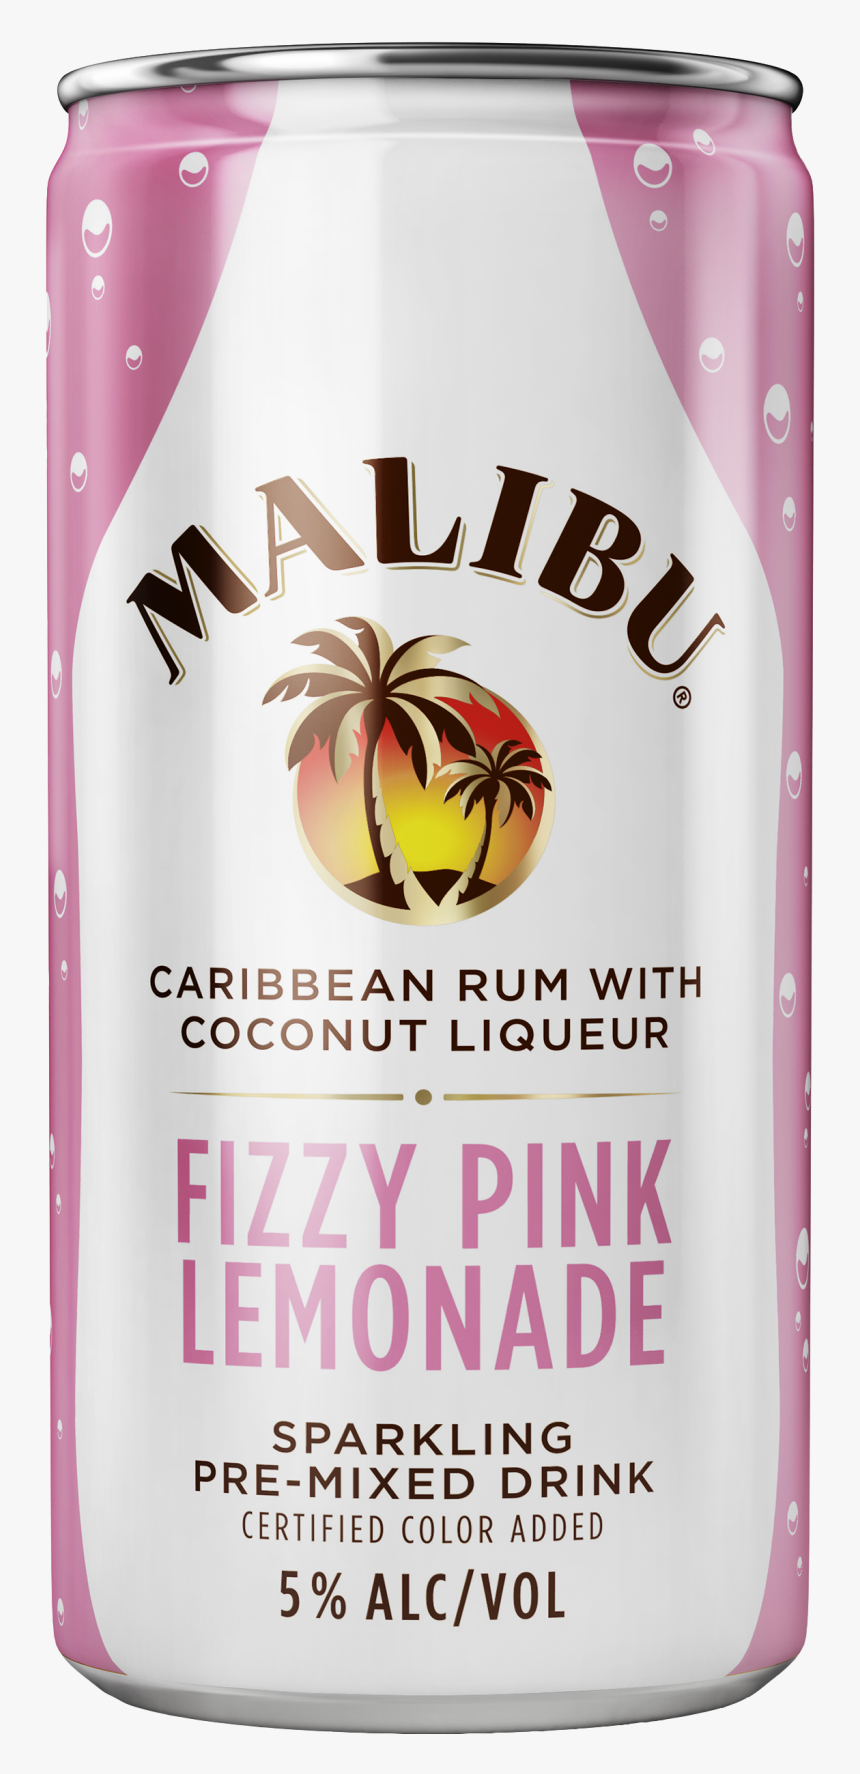 Malibu Rum Logo Png